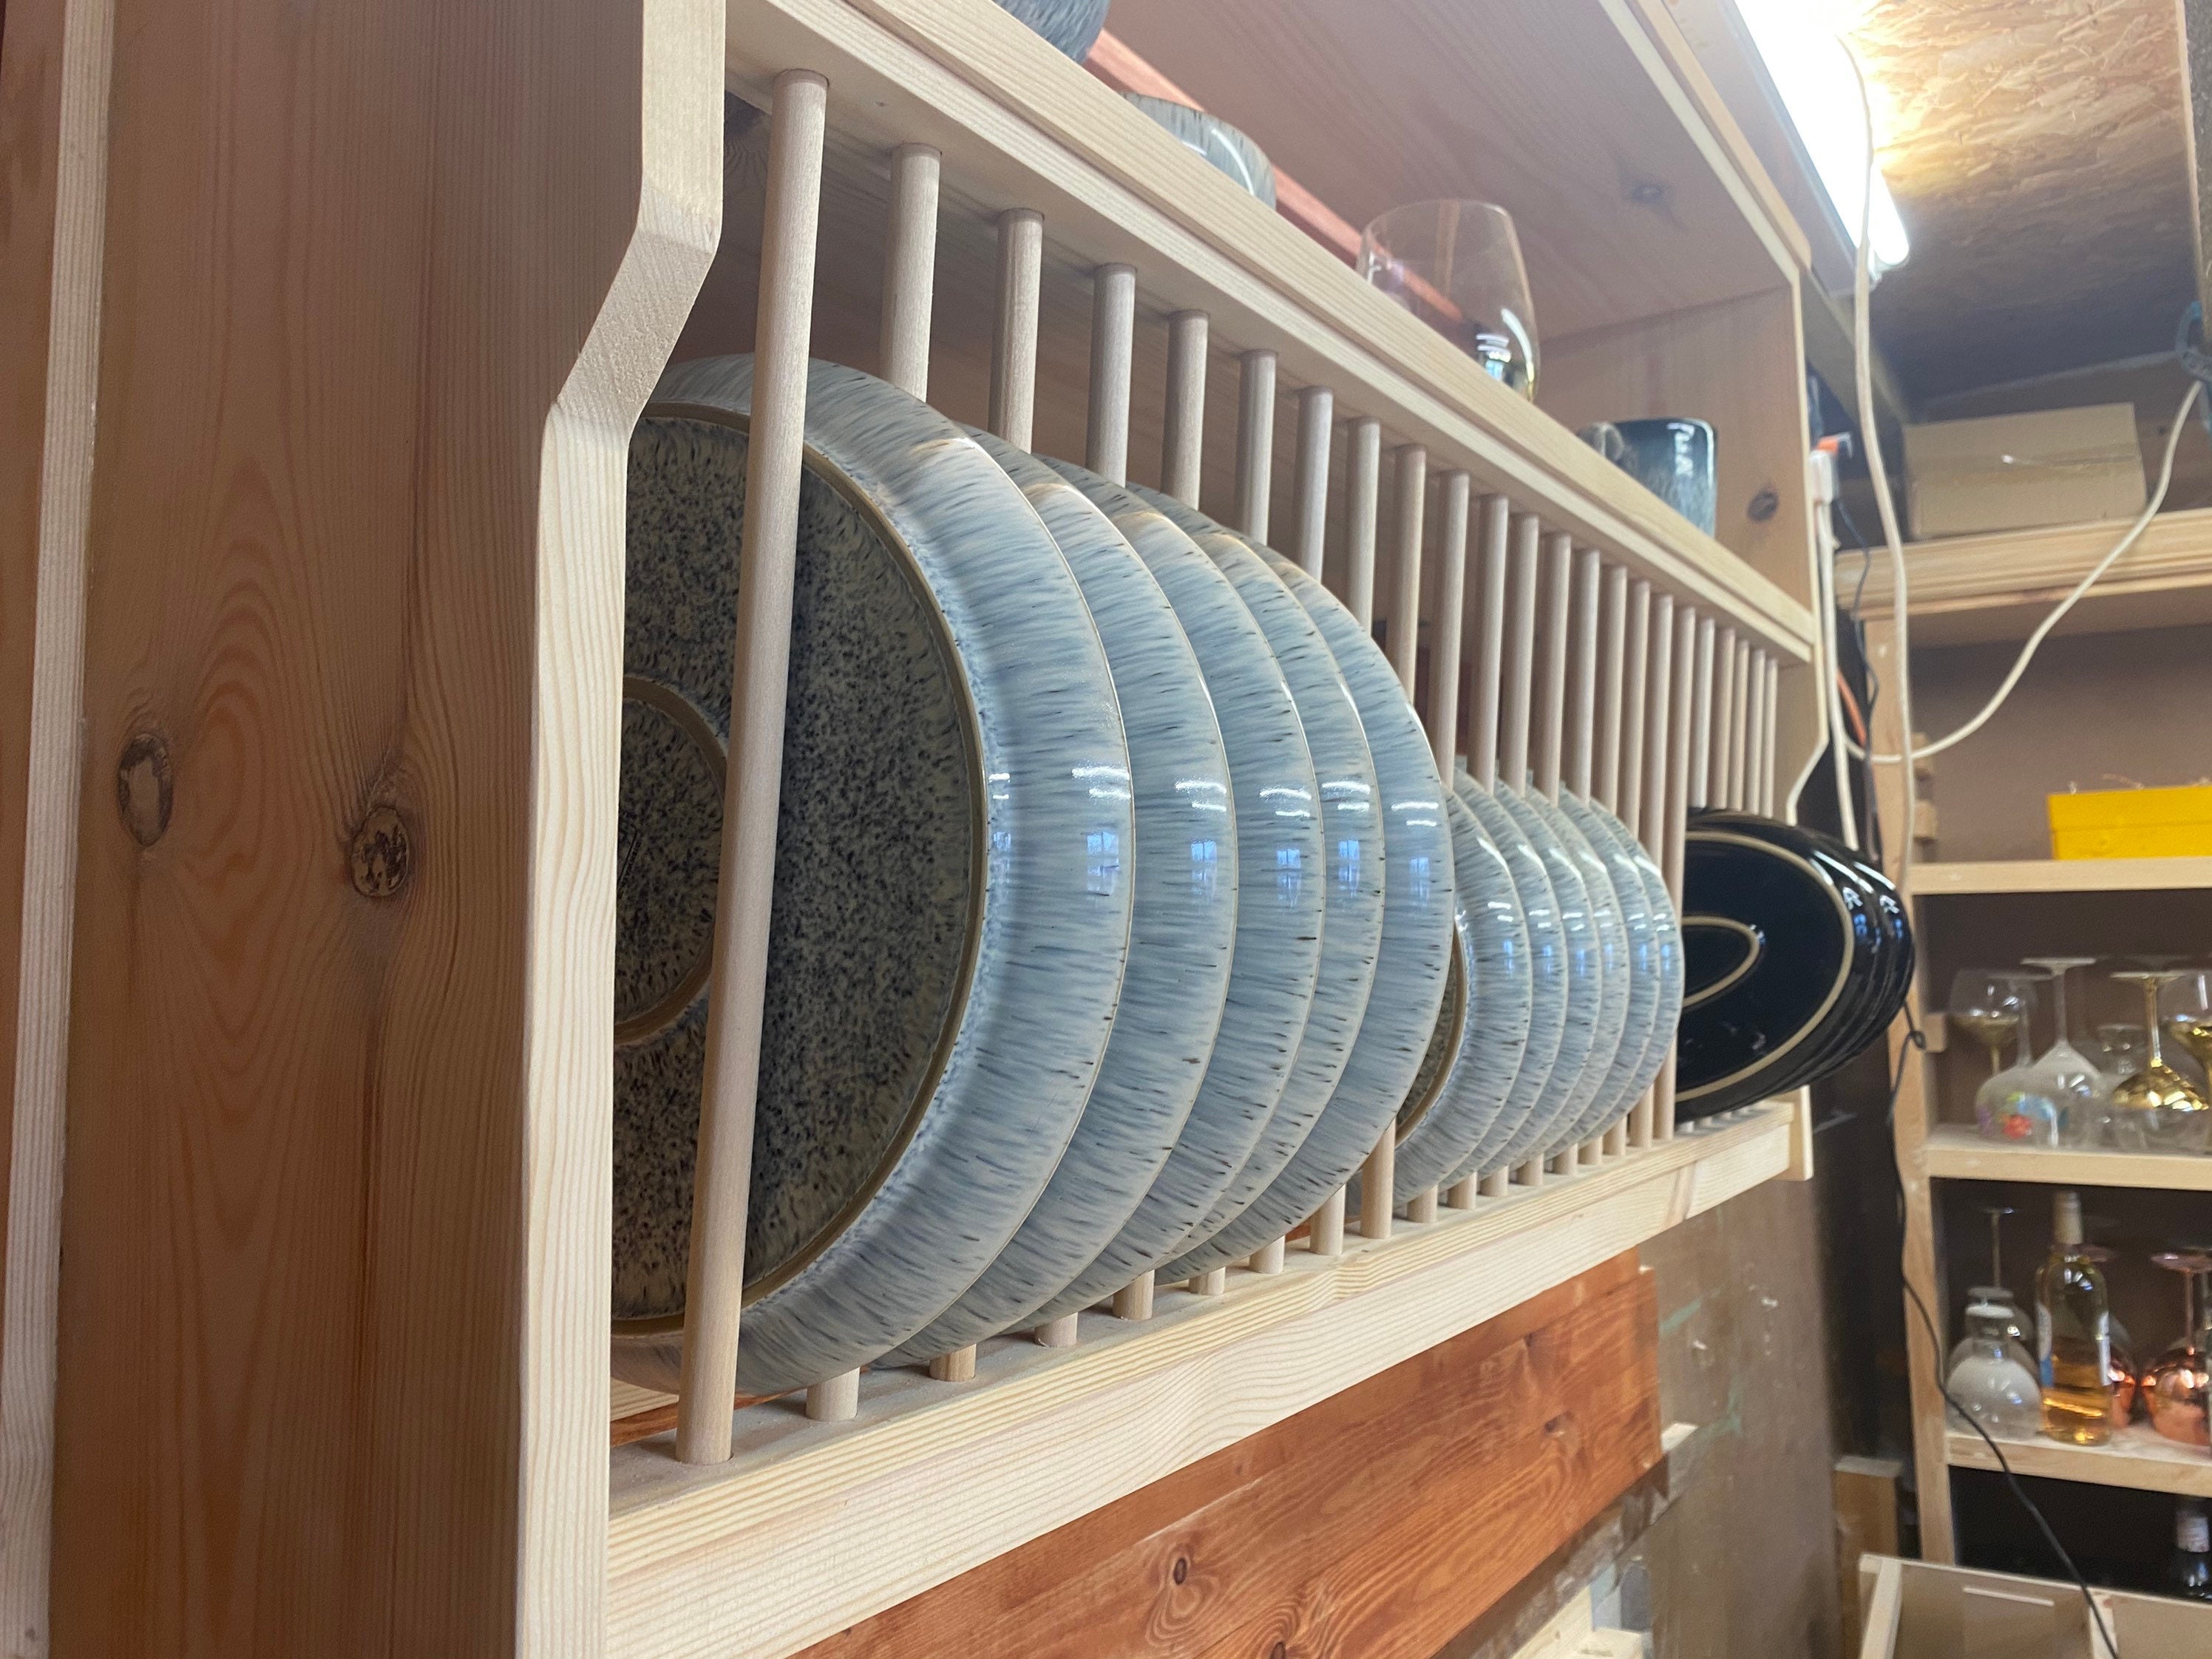 The Gloucestershire Handmade Plate Rack Storage Natural Pine 